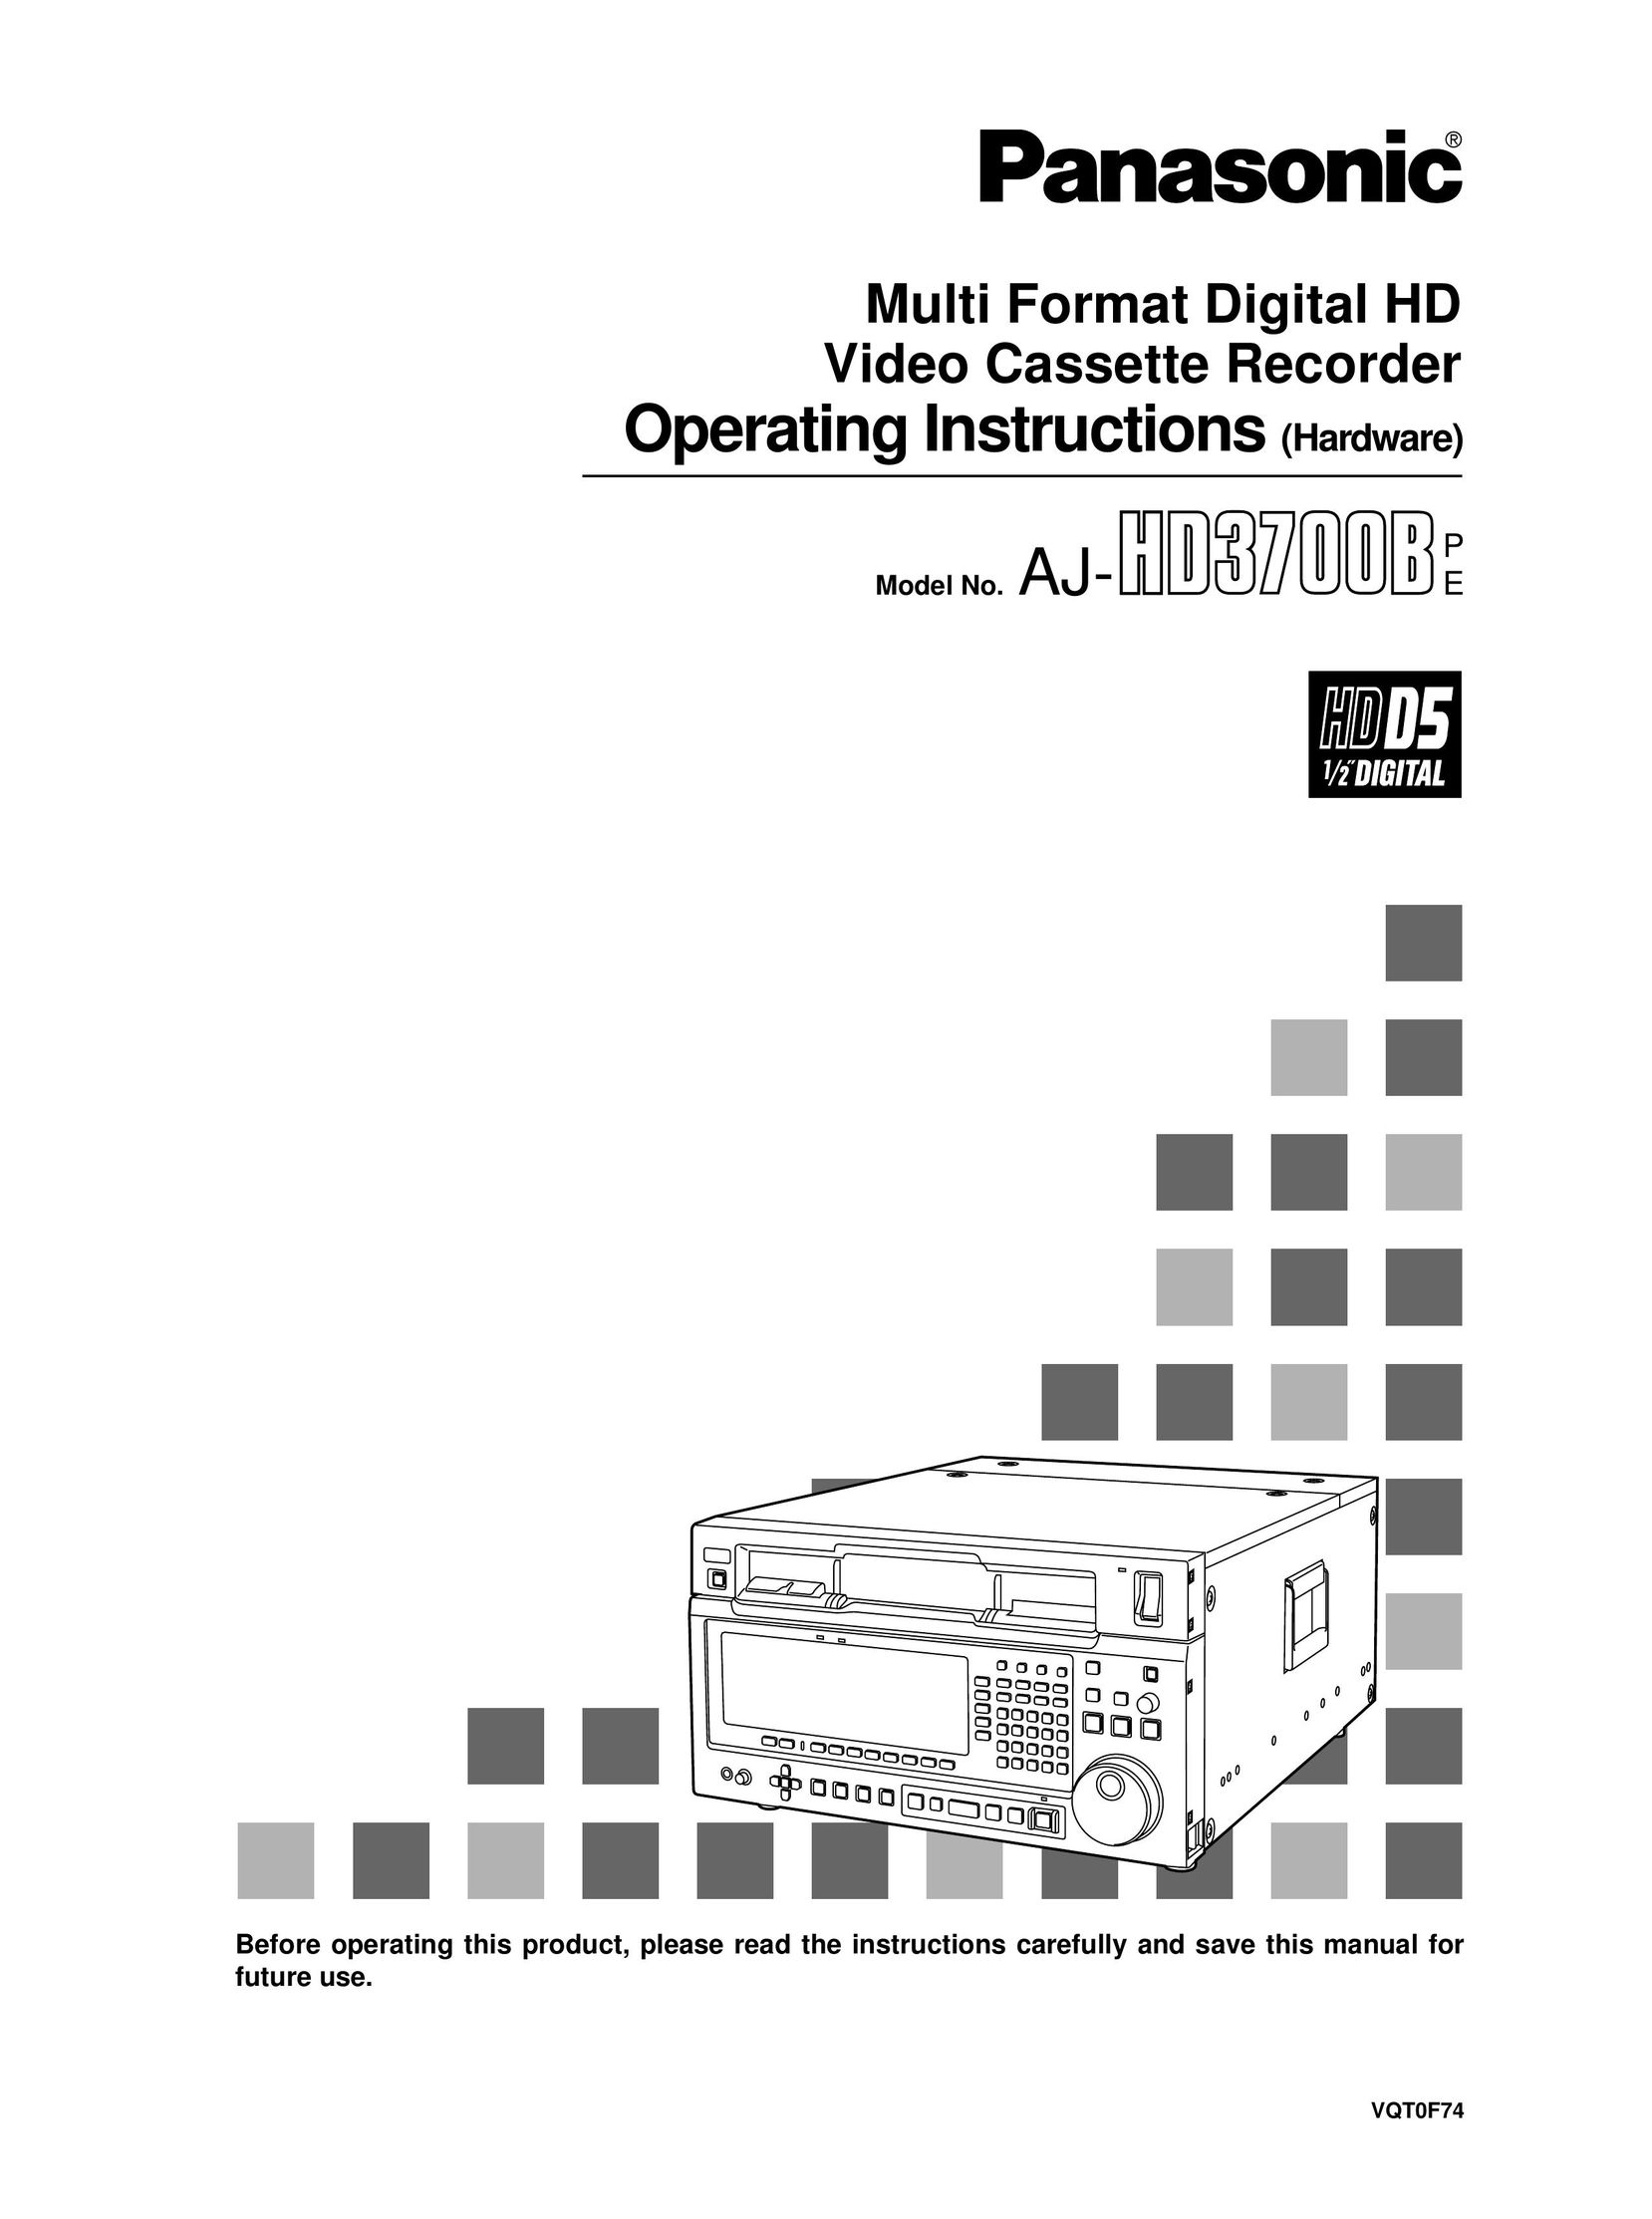 Panasonic AJ-HD3700B VCR User Manual